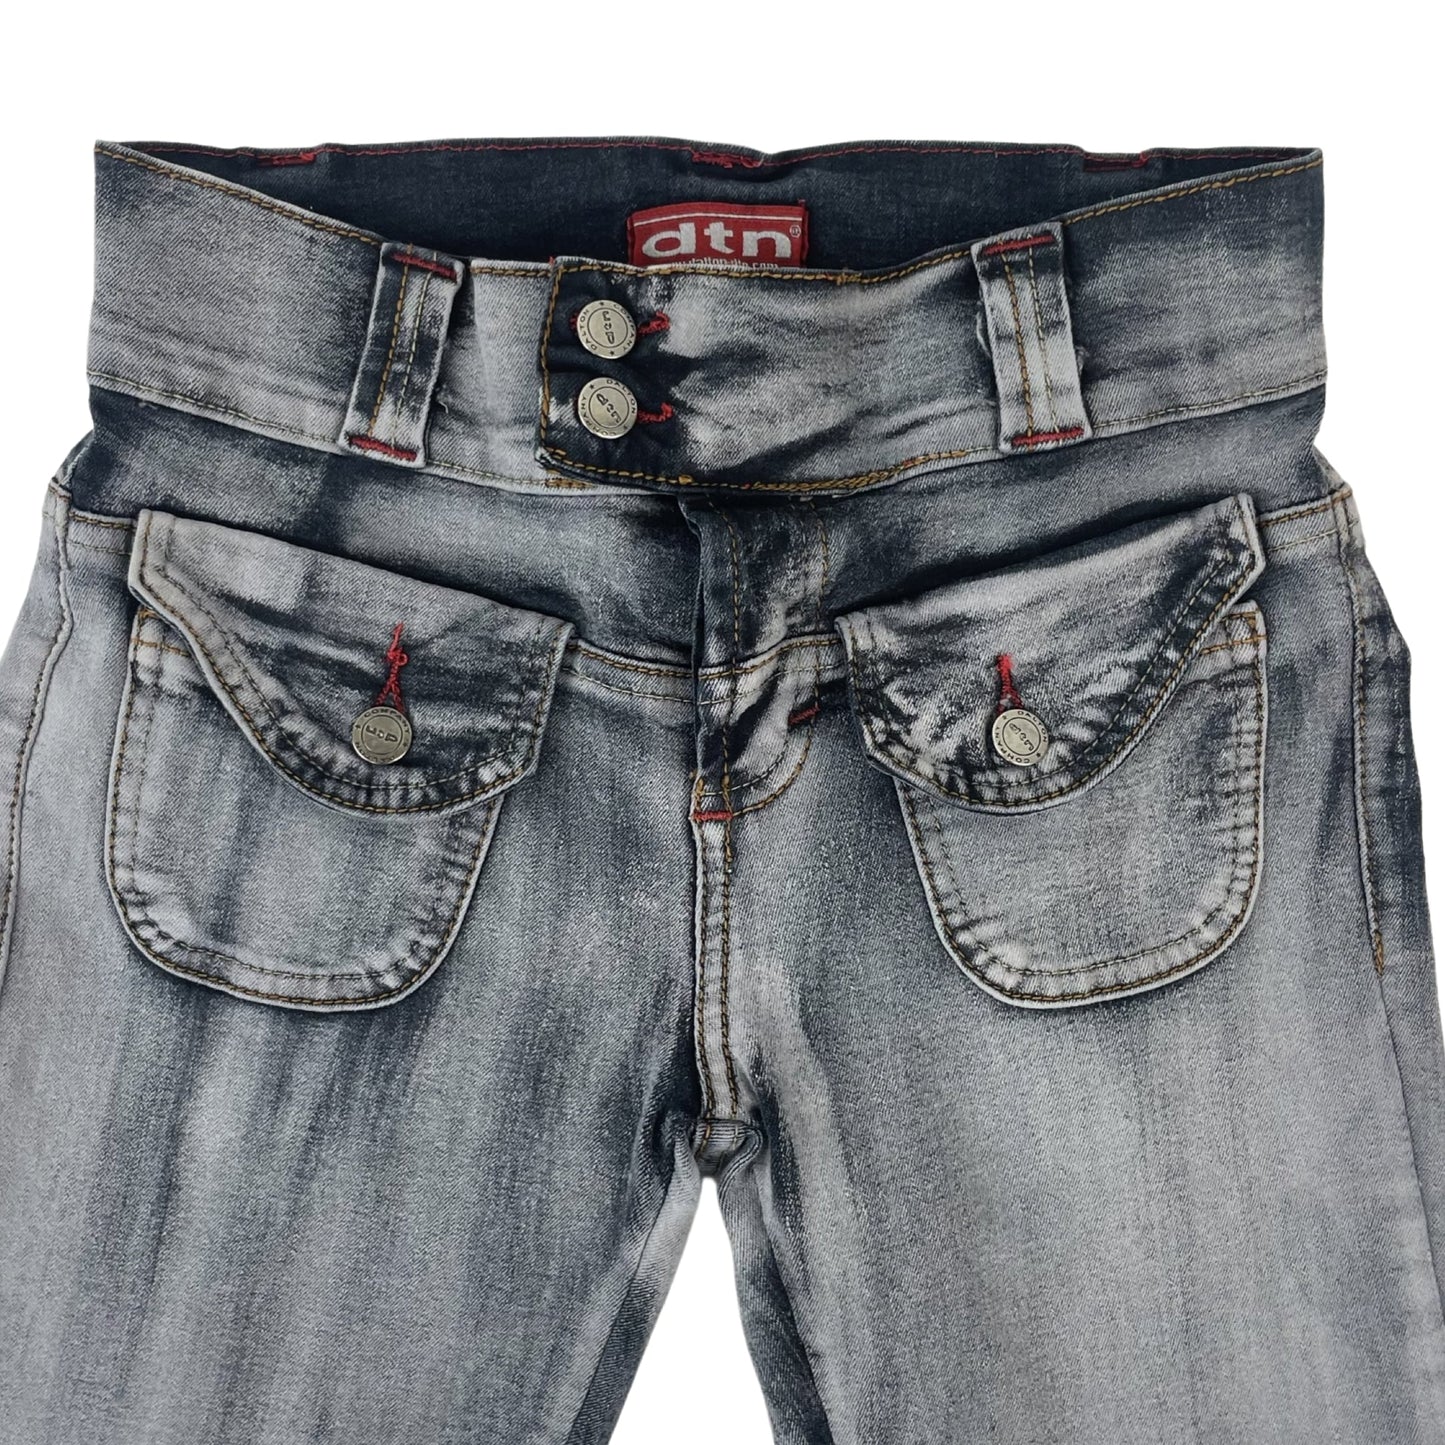 Vintage Y2K Grey Painted Effect Flared Jeans 6